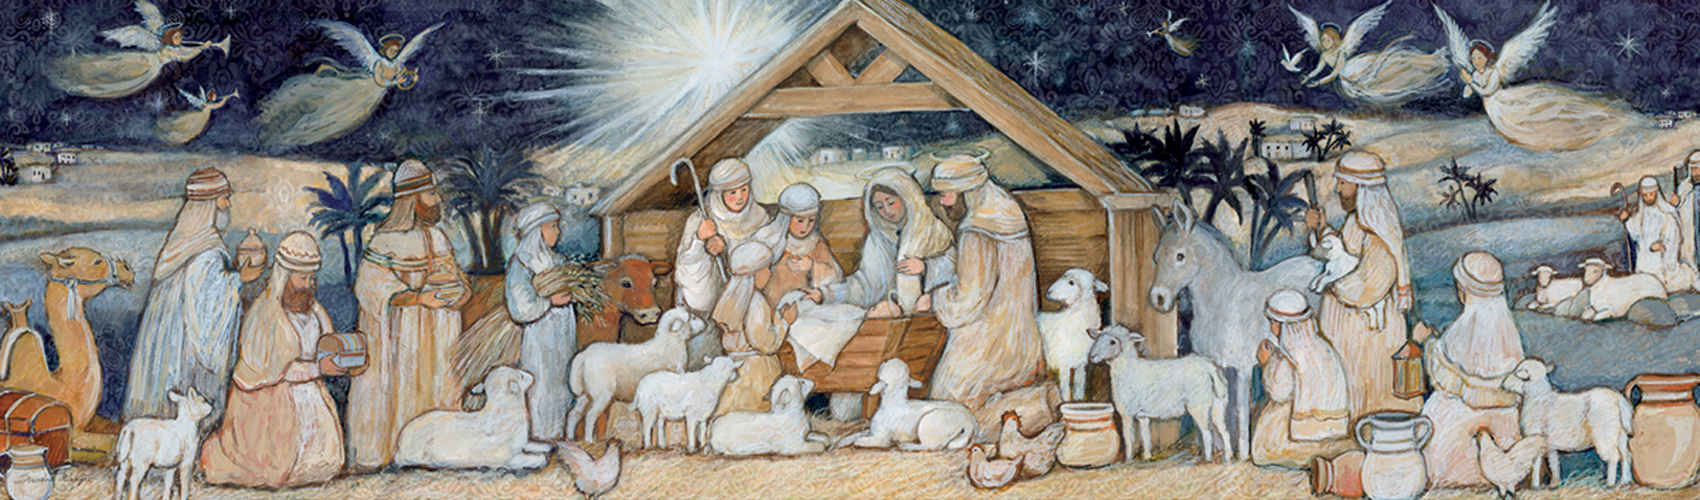 Nativity Set Religious Jigsaw Puzzle